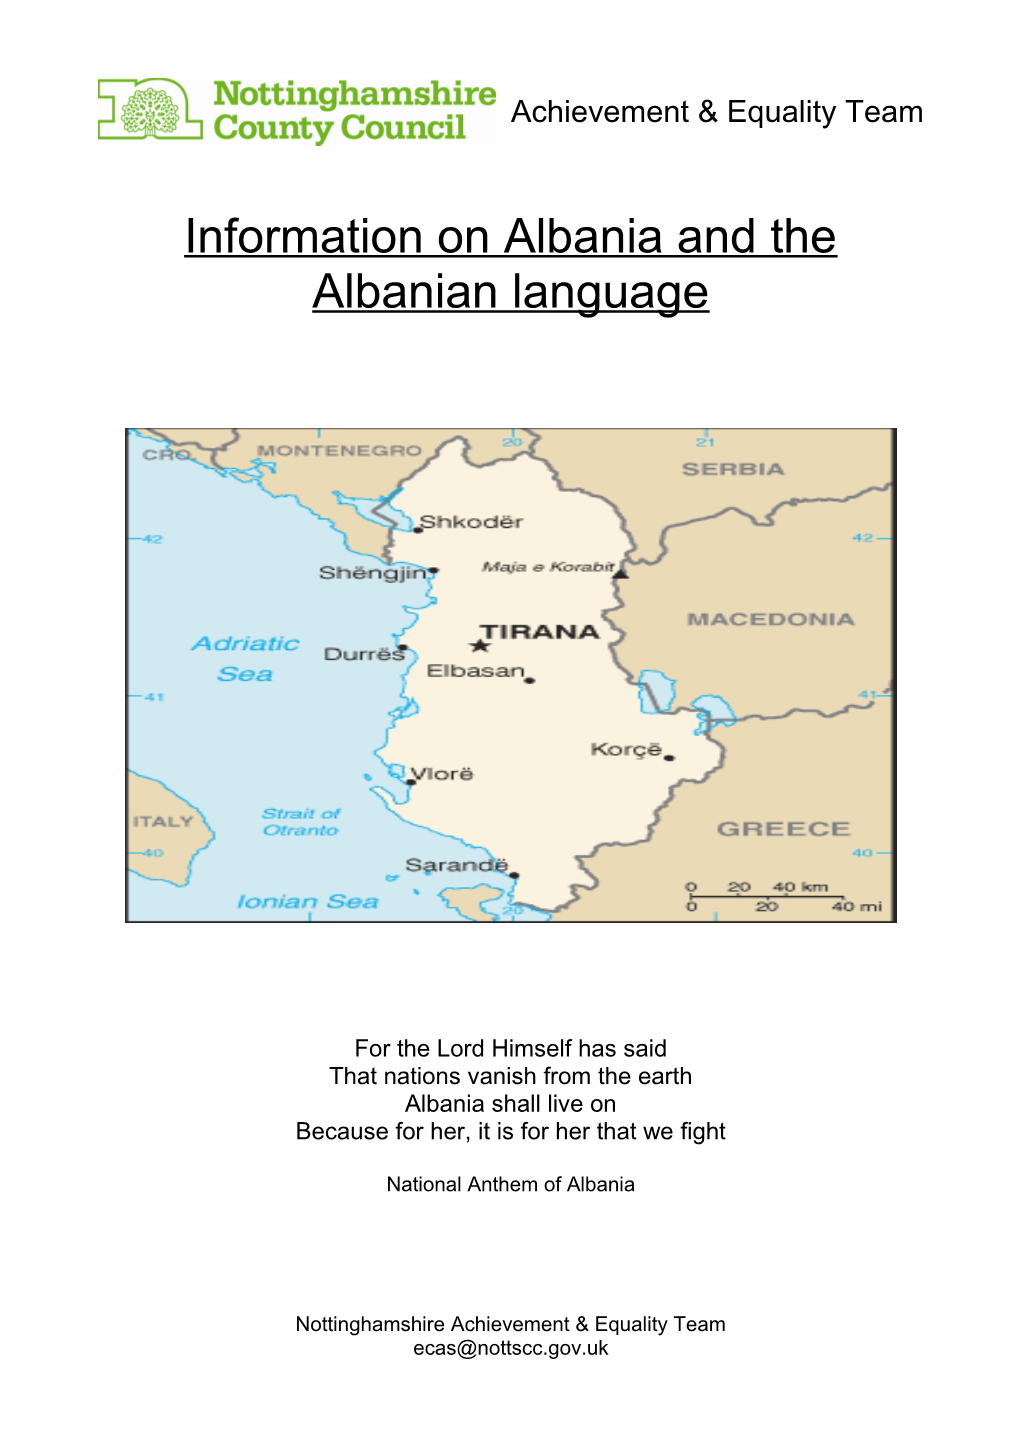 Information on Albania and the Albanian Language